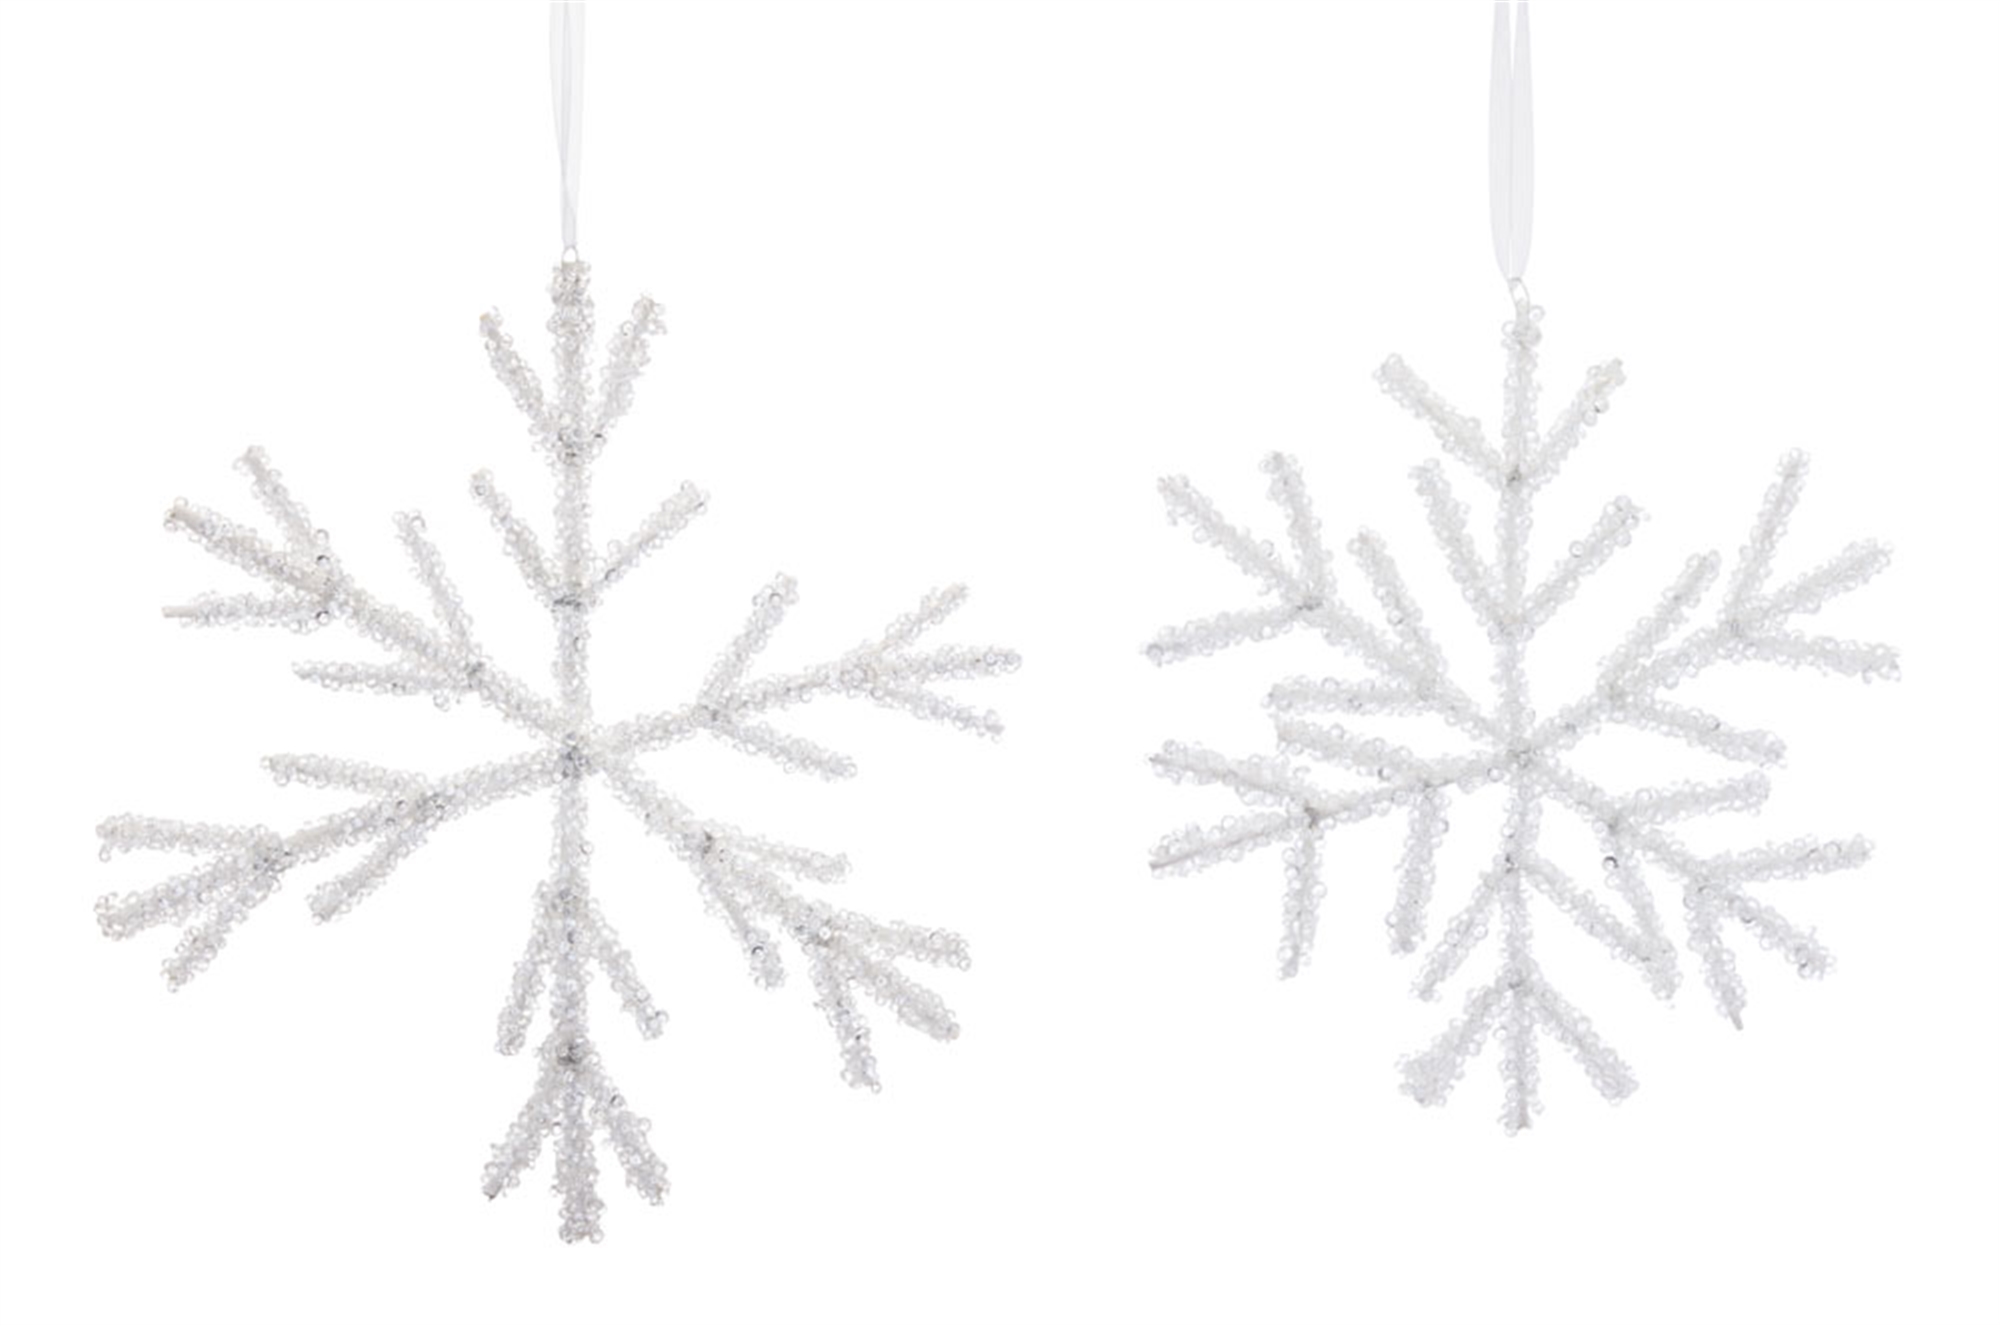 Bead Snowflake Ornament (Set of 12) 9"H, 12.5"H Acrylic